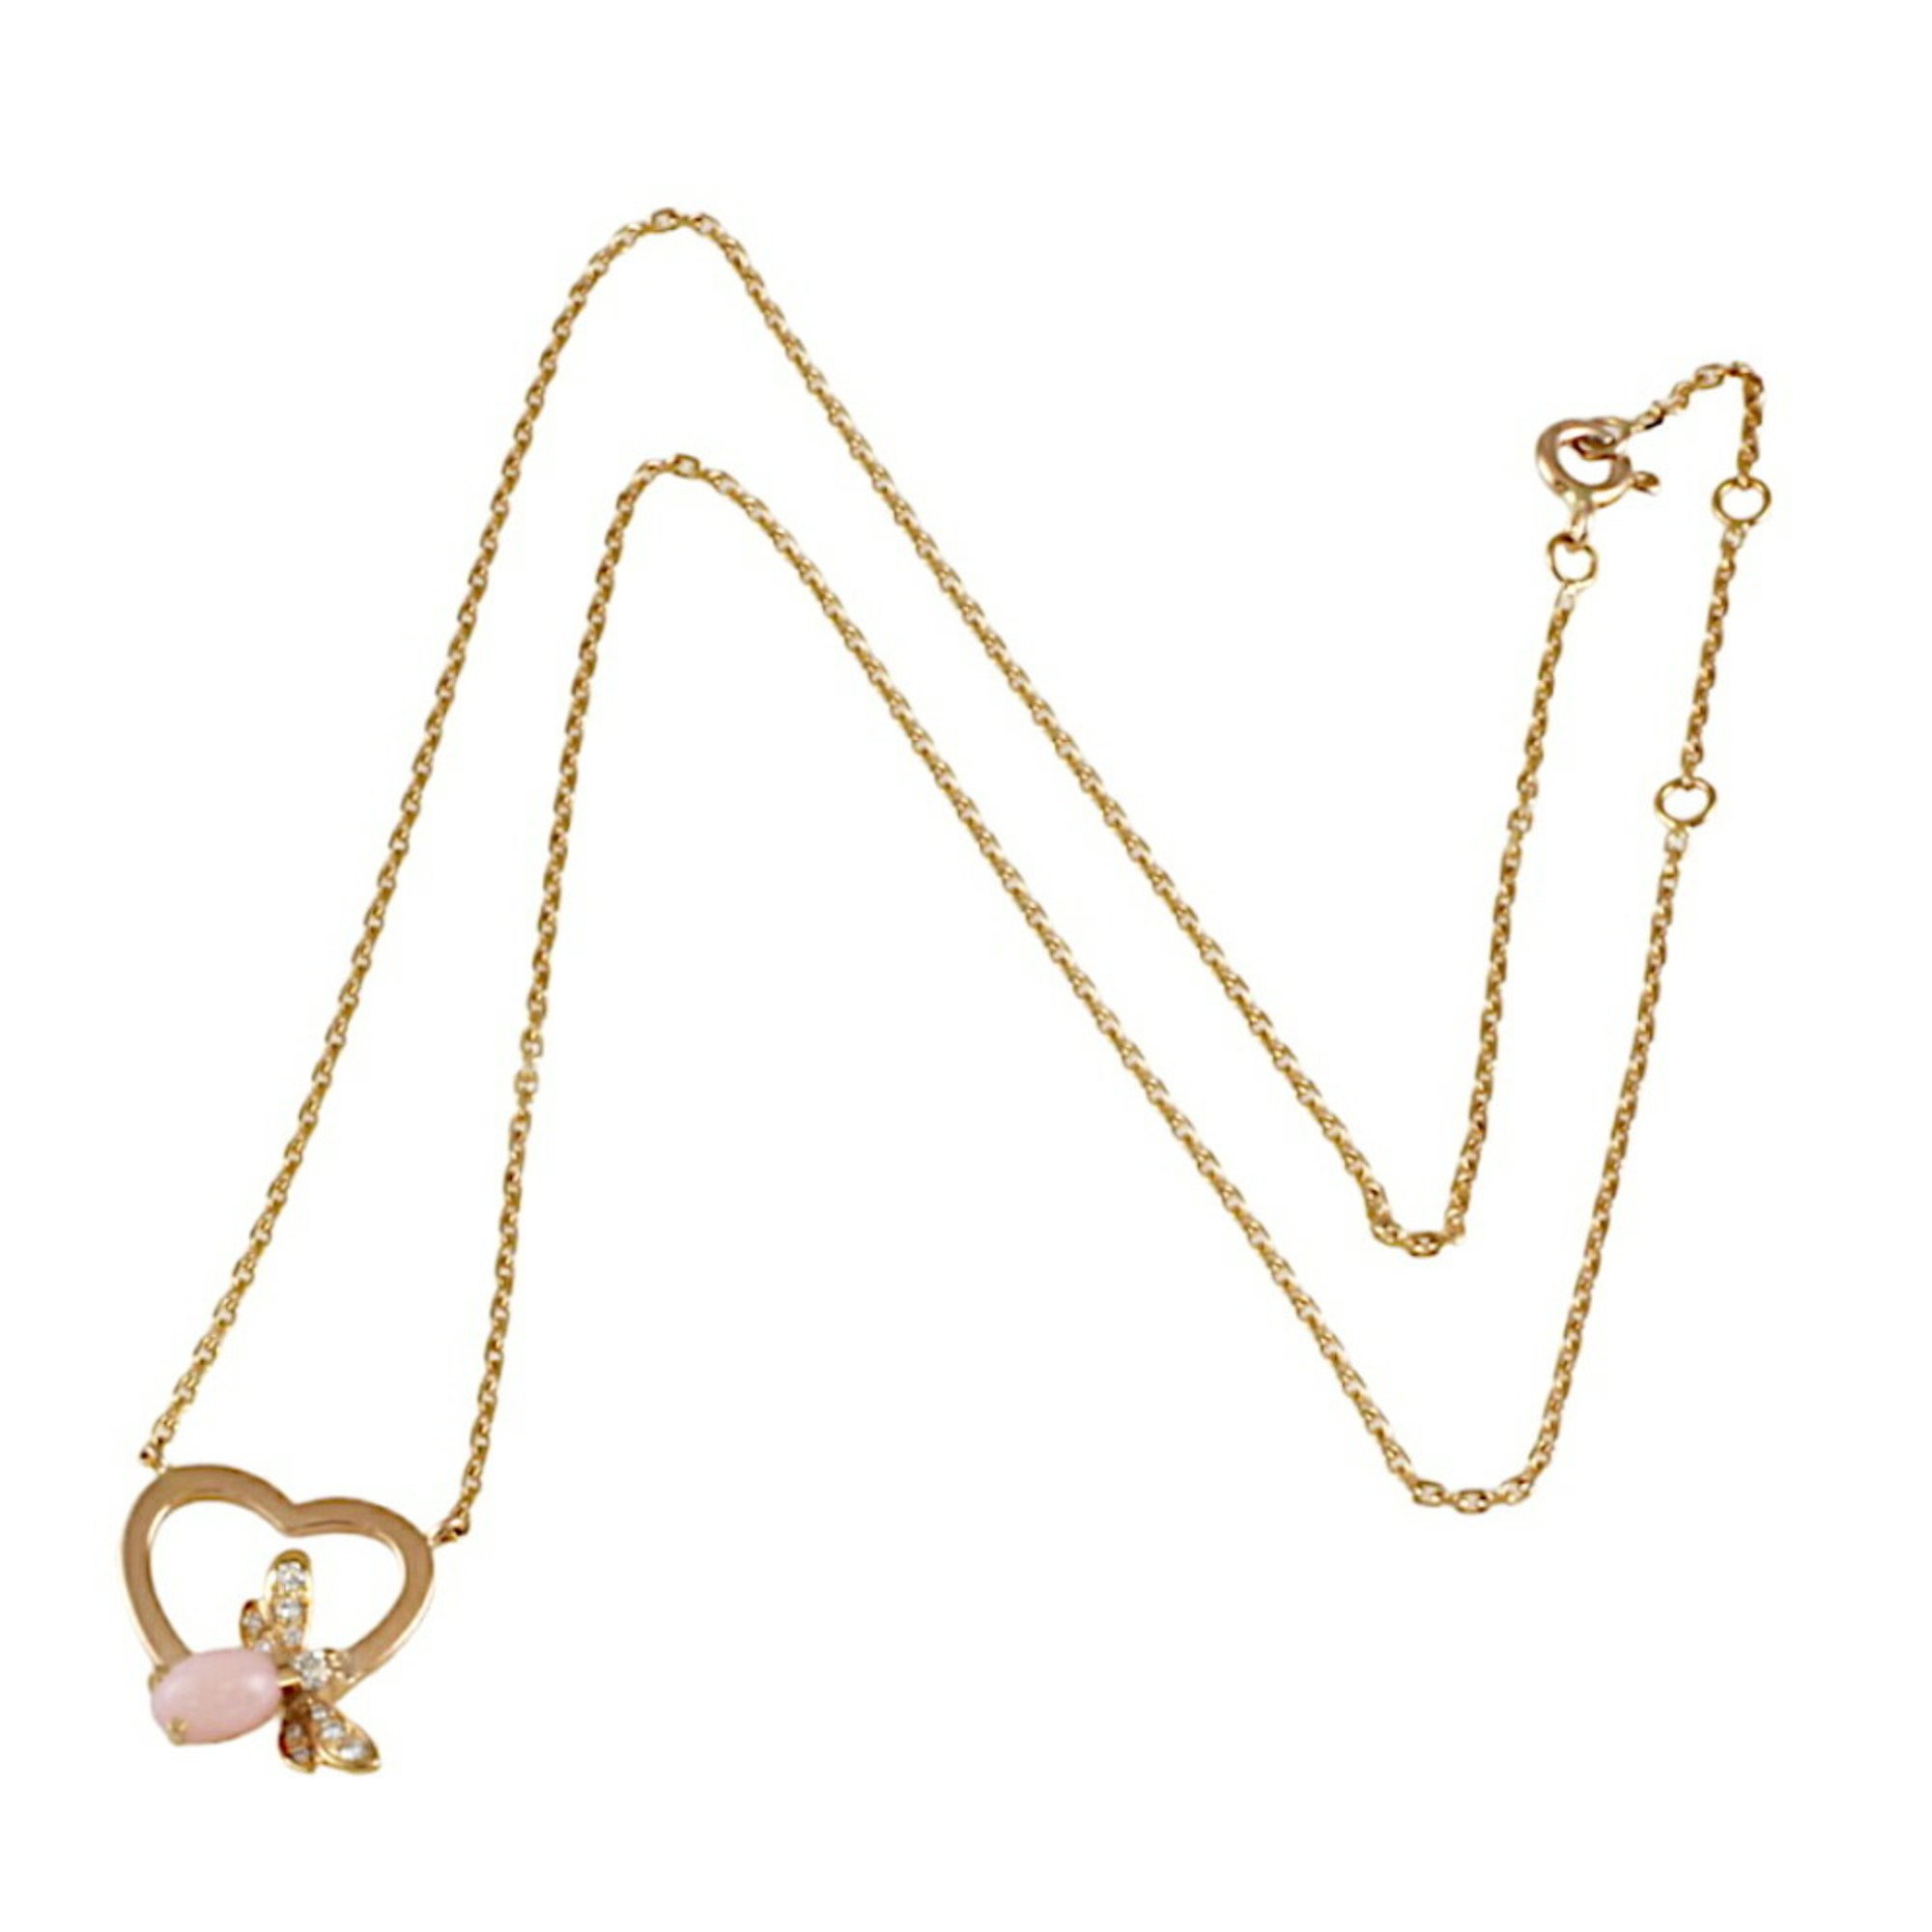 Chaumet Attrape More Necklace 18K Pink Opal Diamond Women's